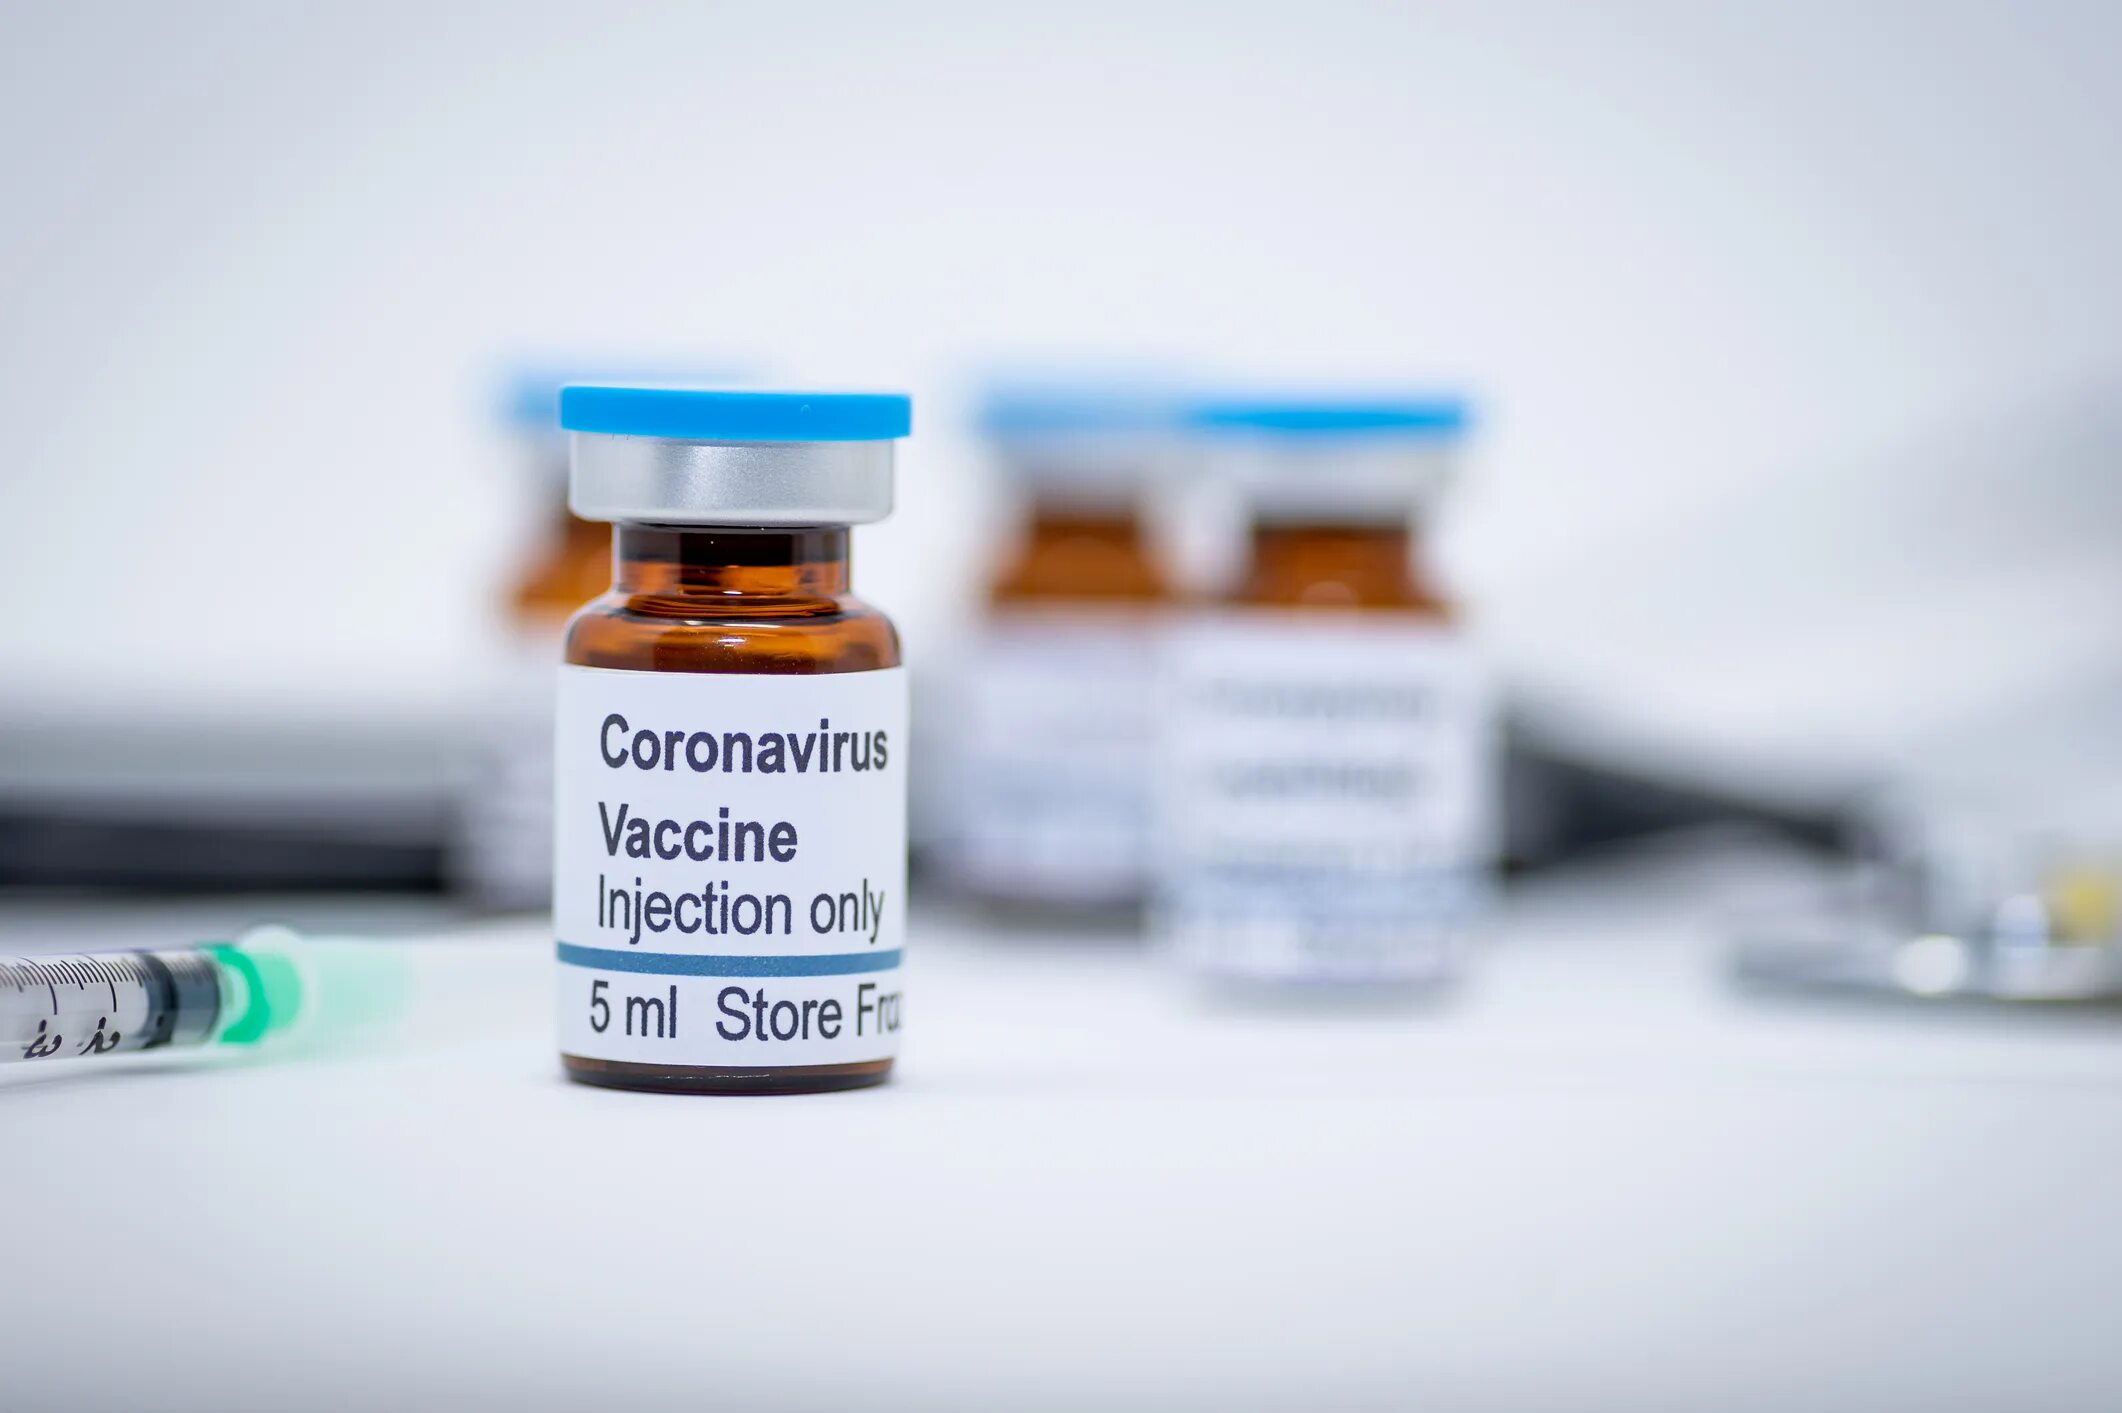 Covid вакцина. Vaccine Covid-19. Вакцина против коронавируса. Вакциная отткороновируса. Virus vaccine